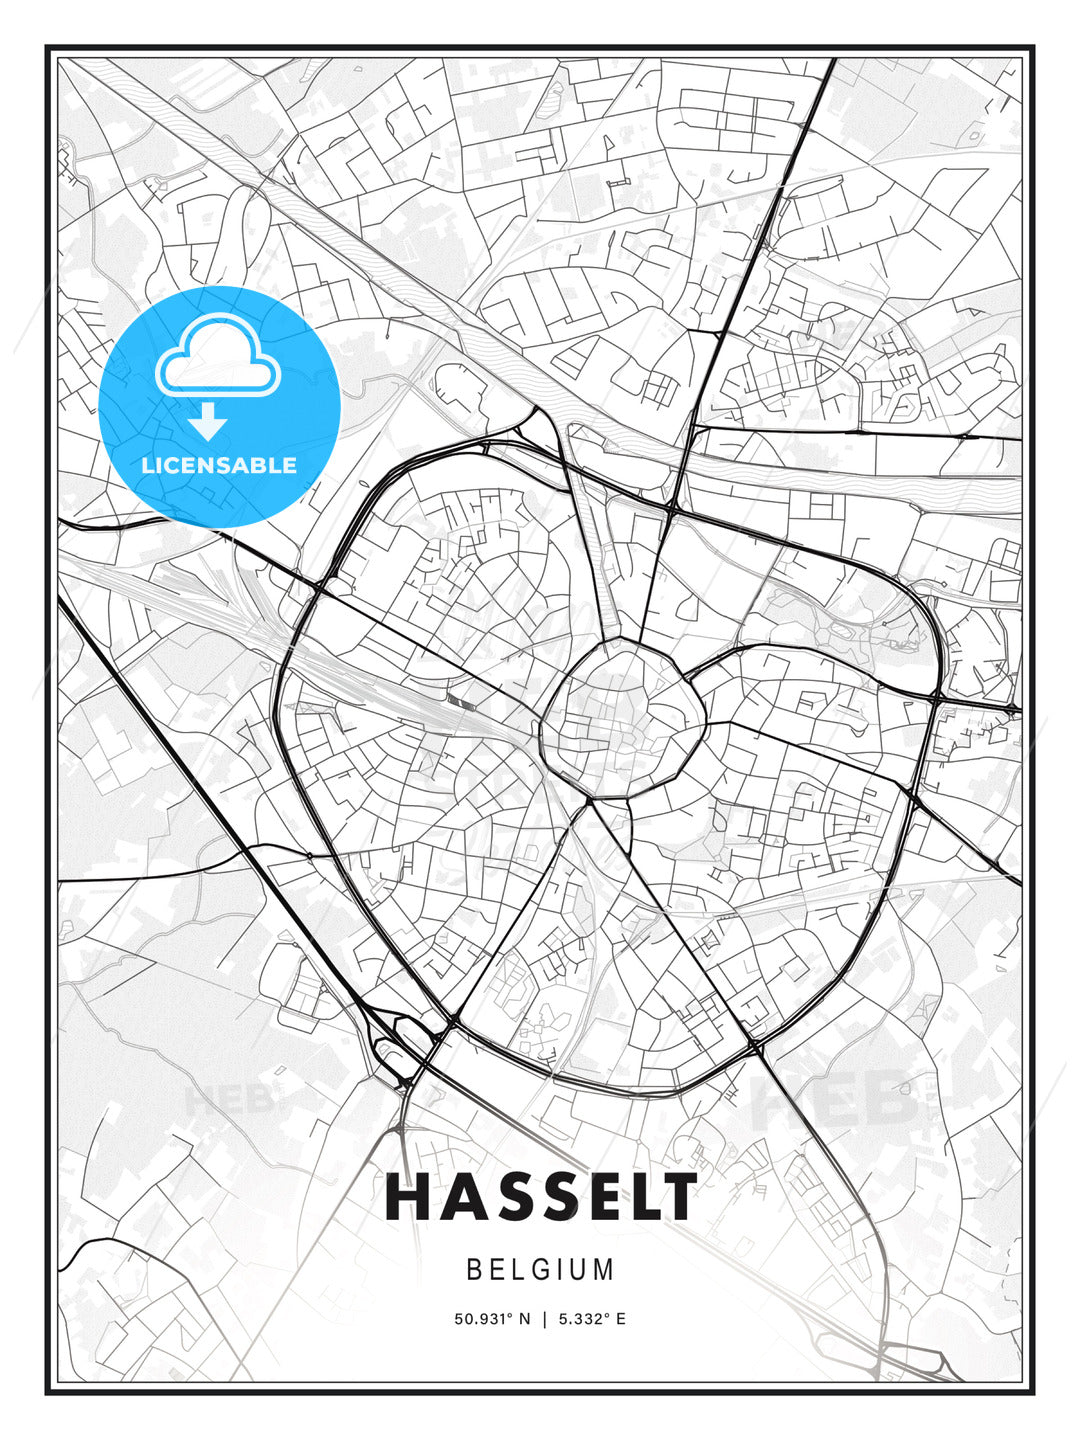 Hasselt, Belgium, Modern Print Template in Various Formats - HEBSTREITS Sketches